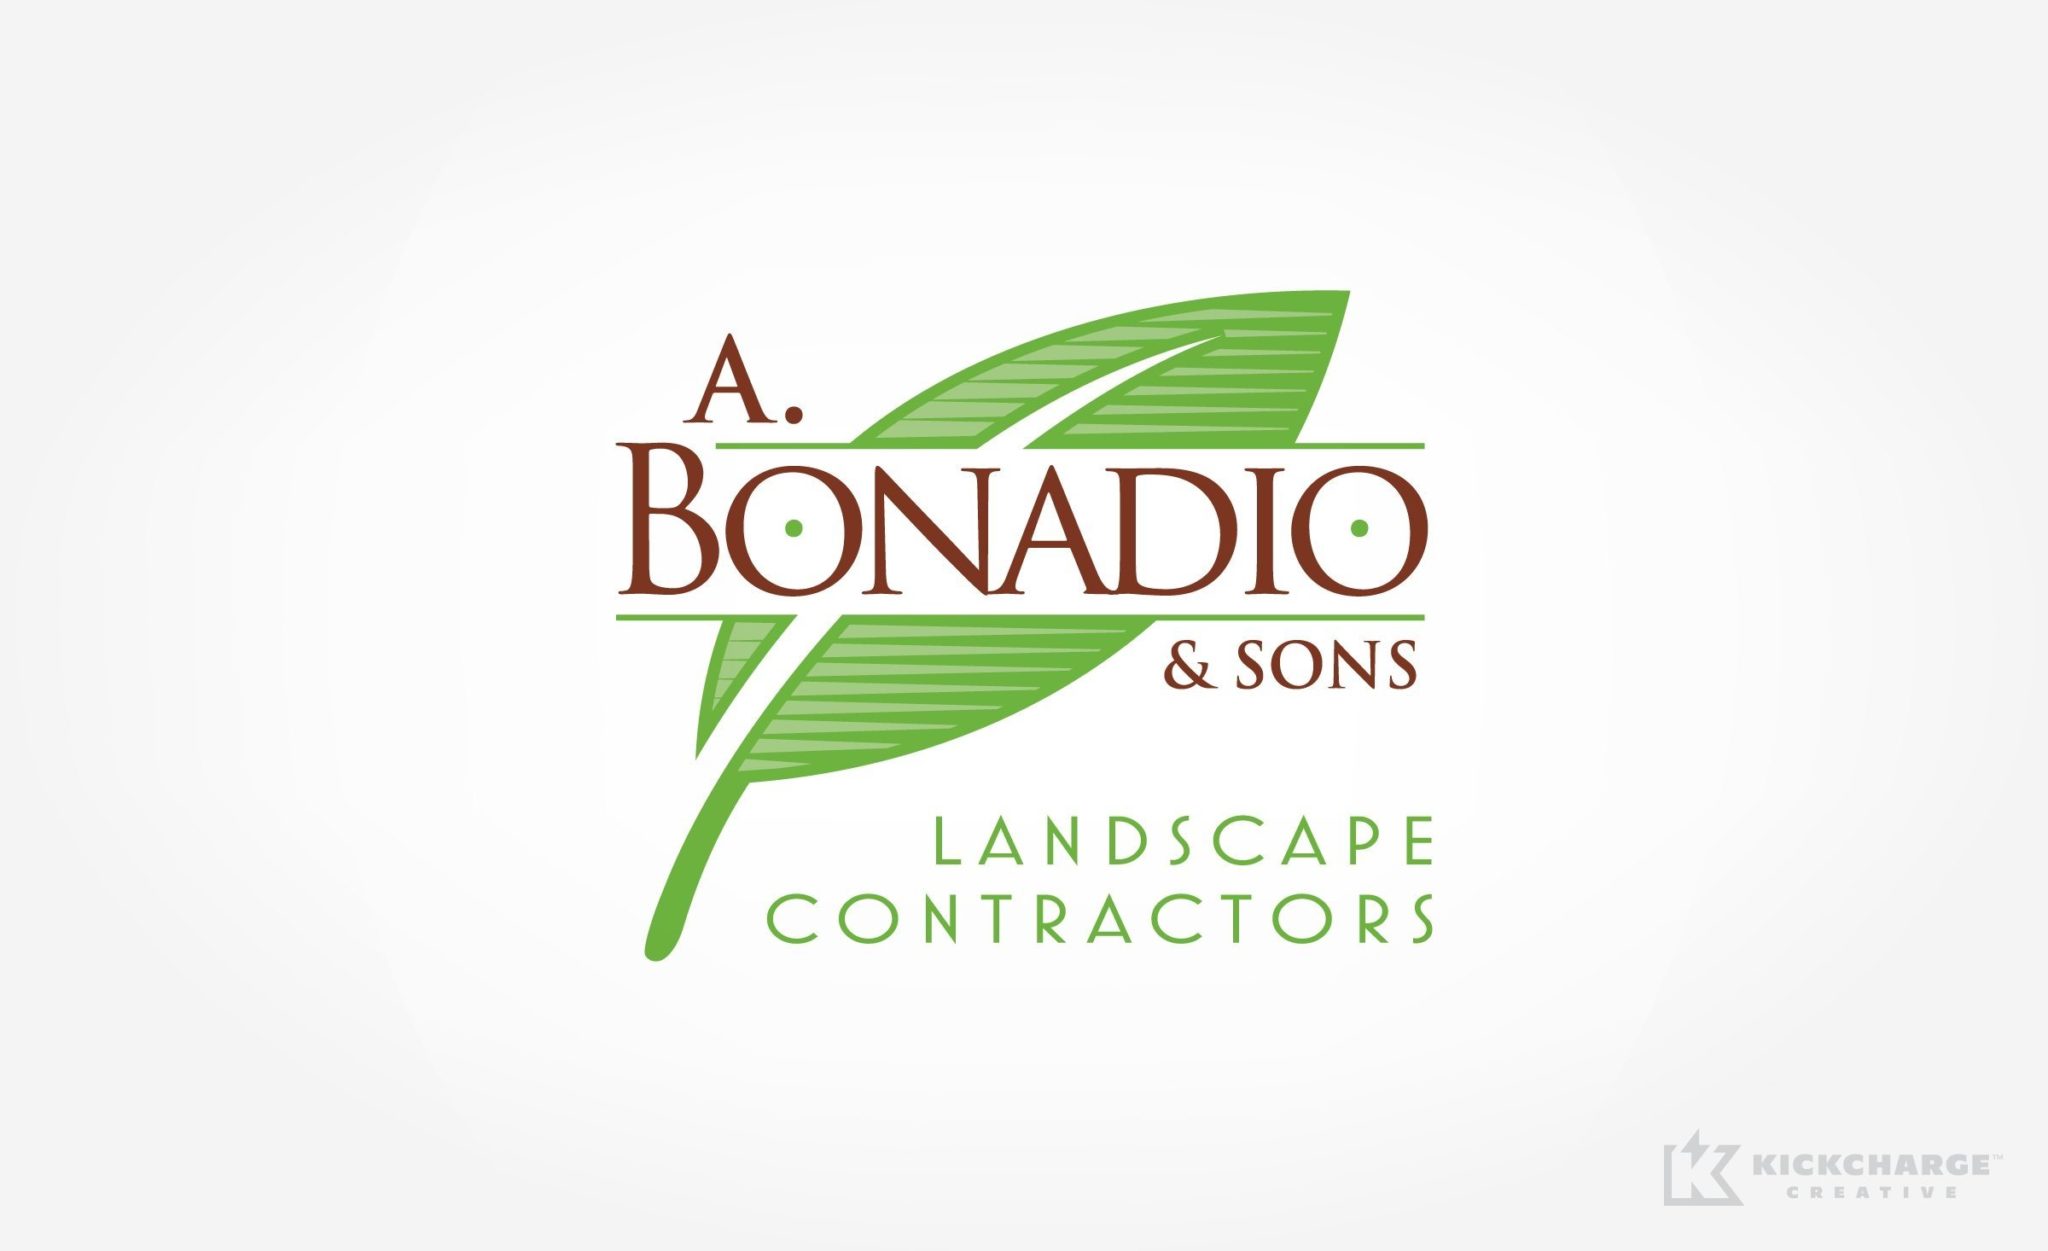 A. Bonadio & Sons